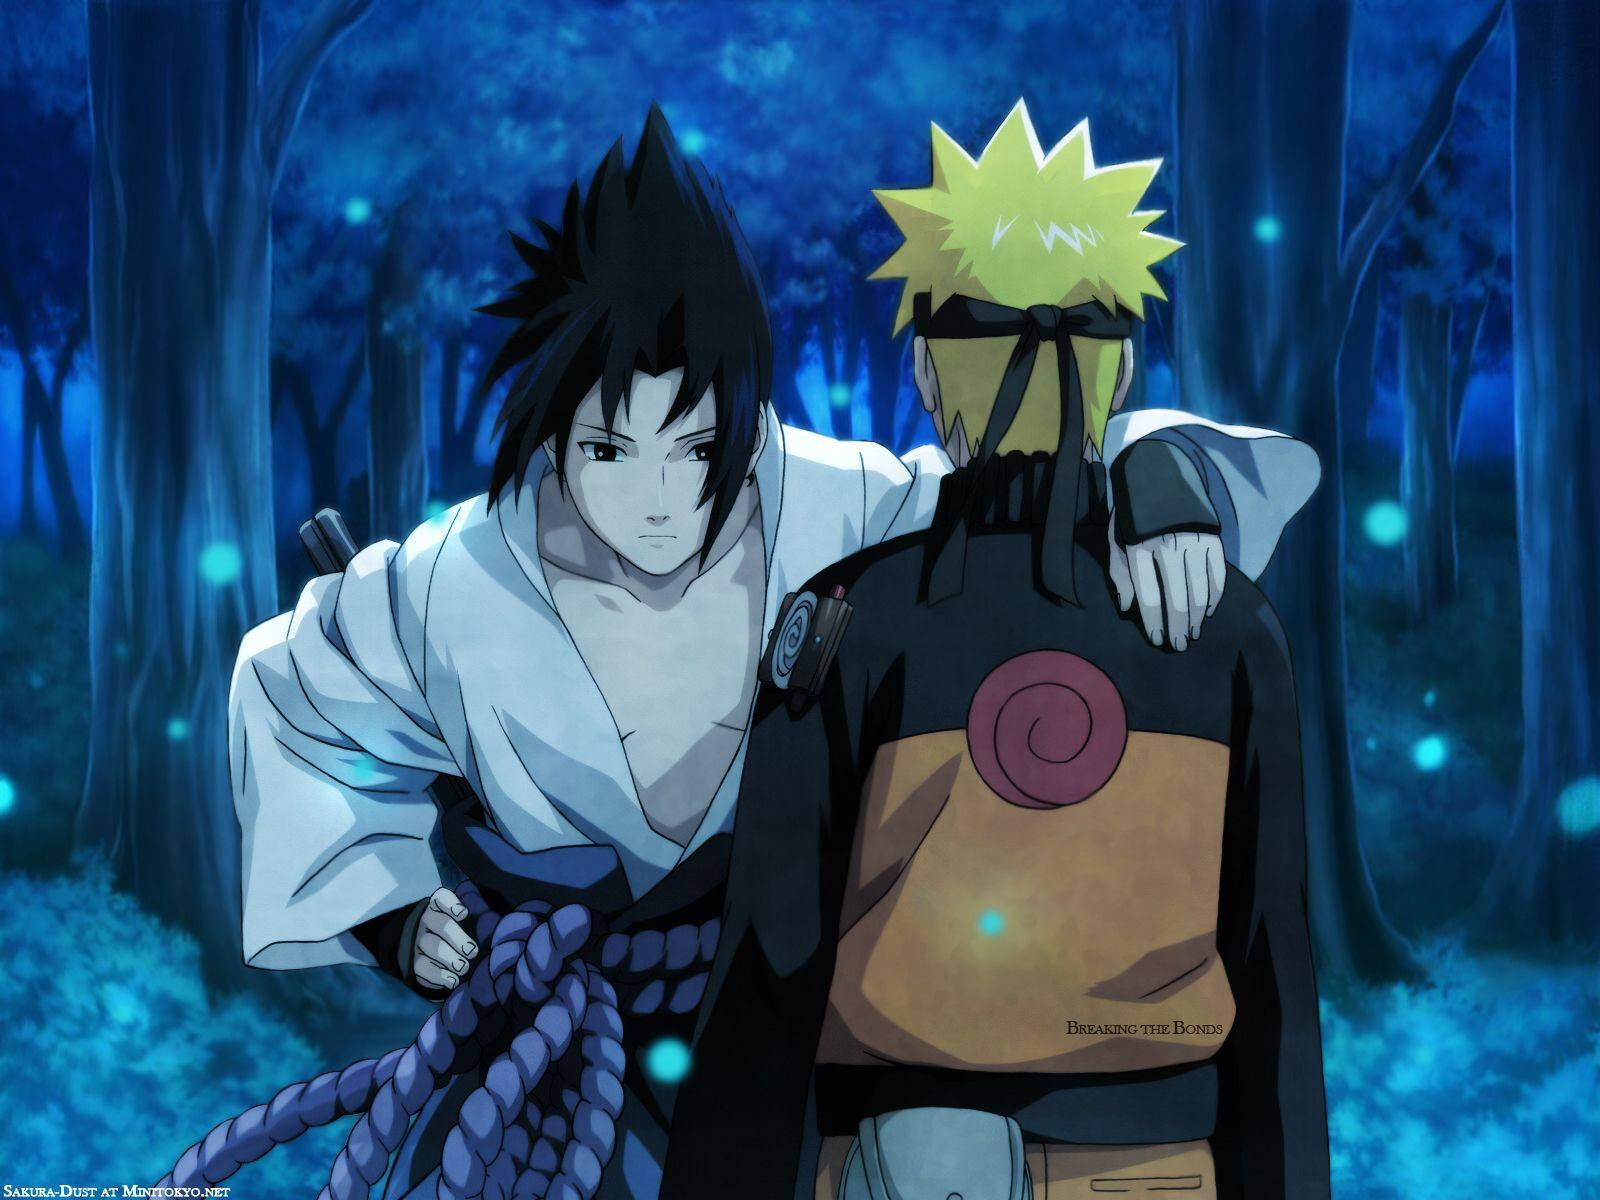 Sasuke Vs Naruto In A Forest